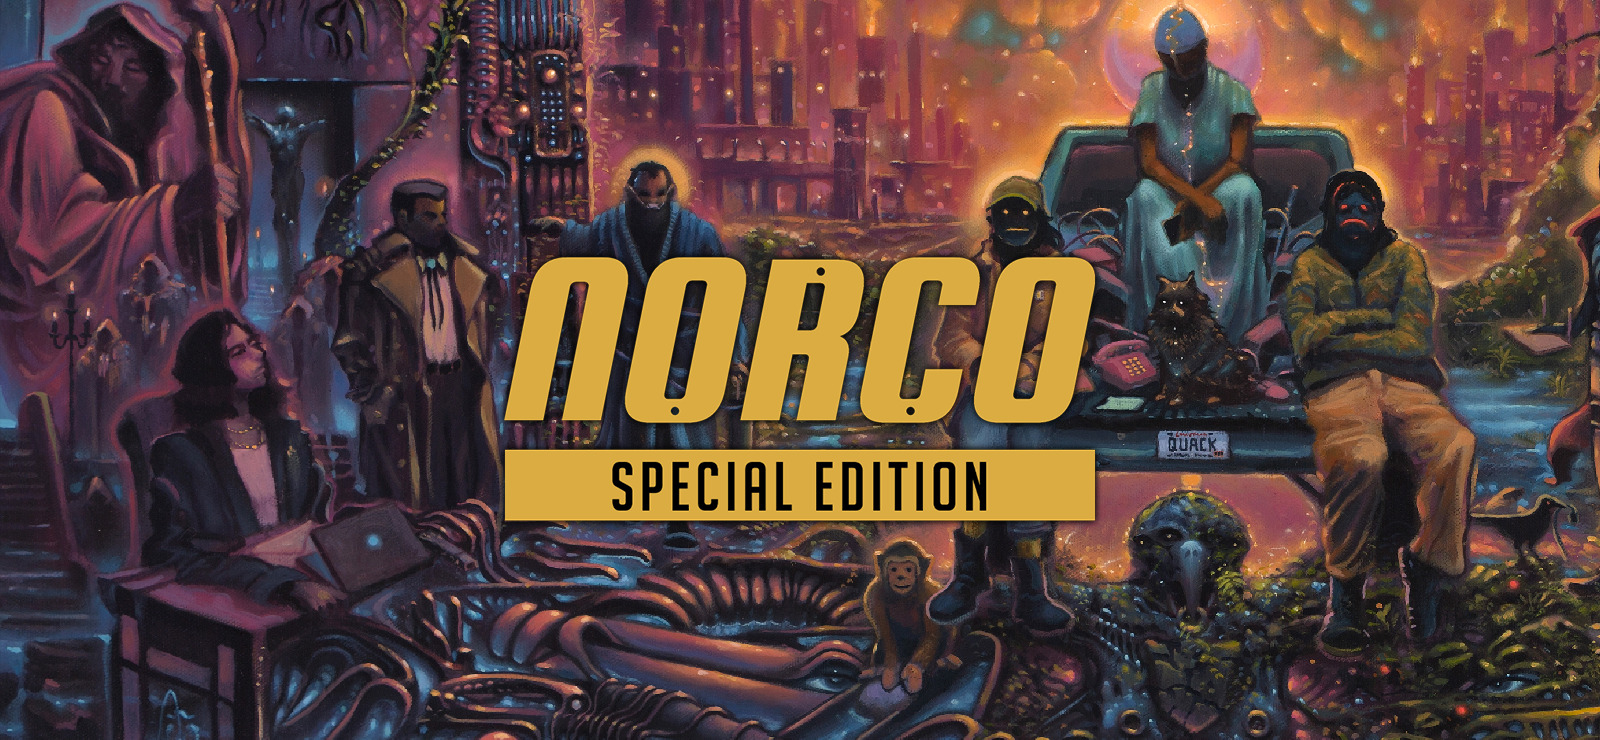 NORCO - Metacritic